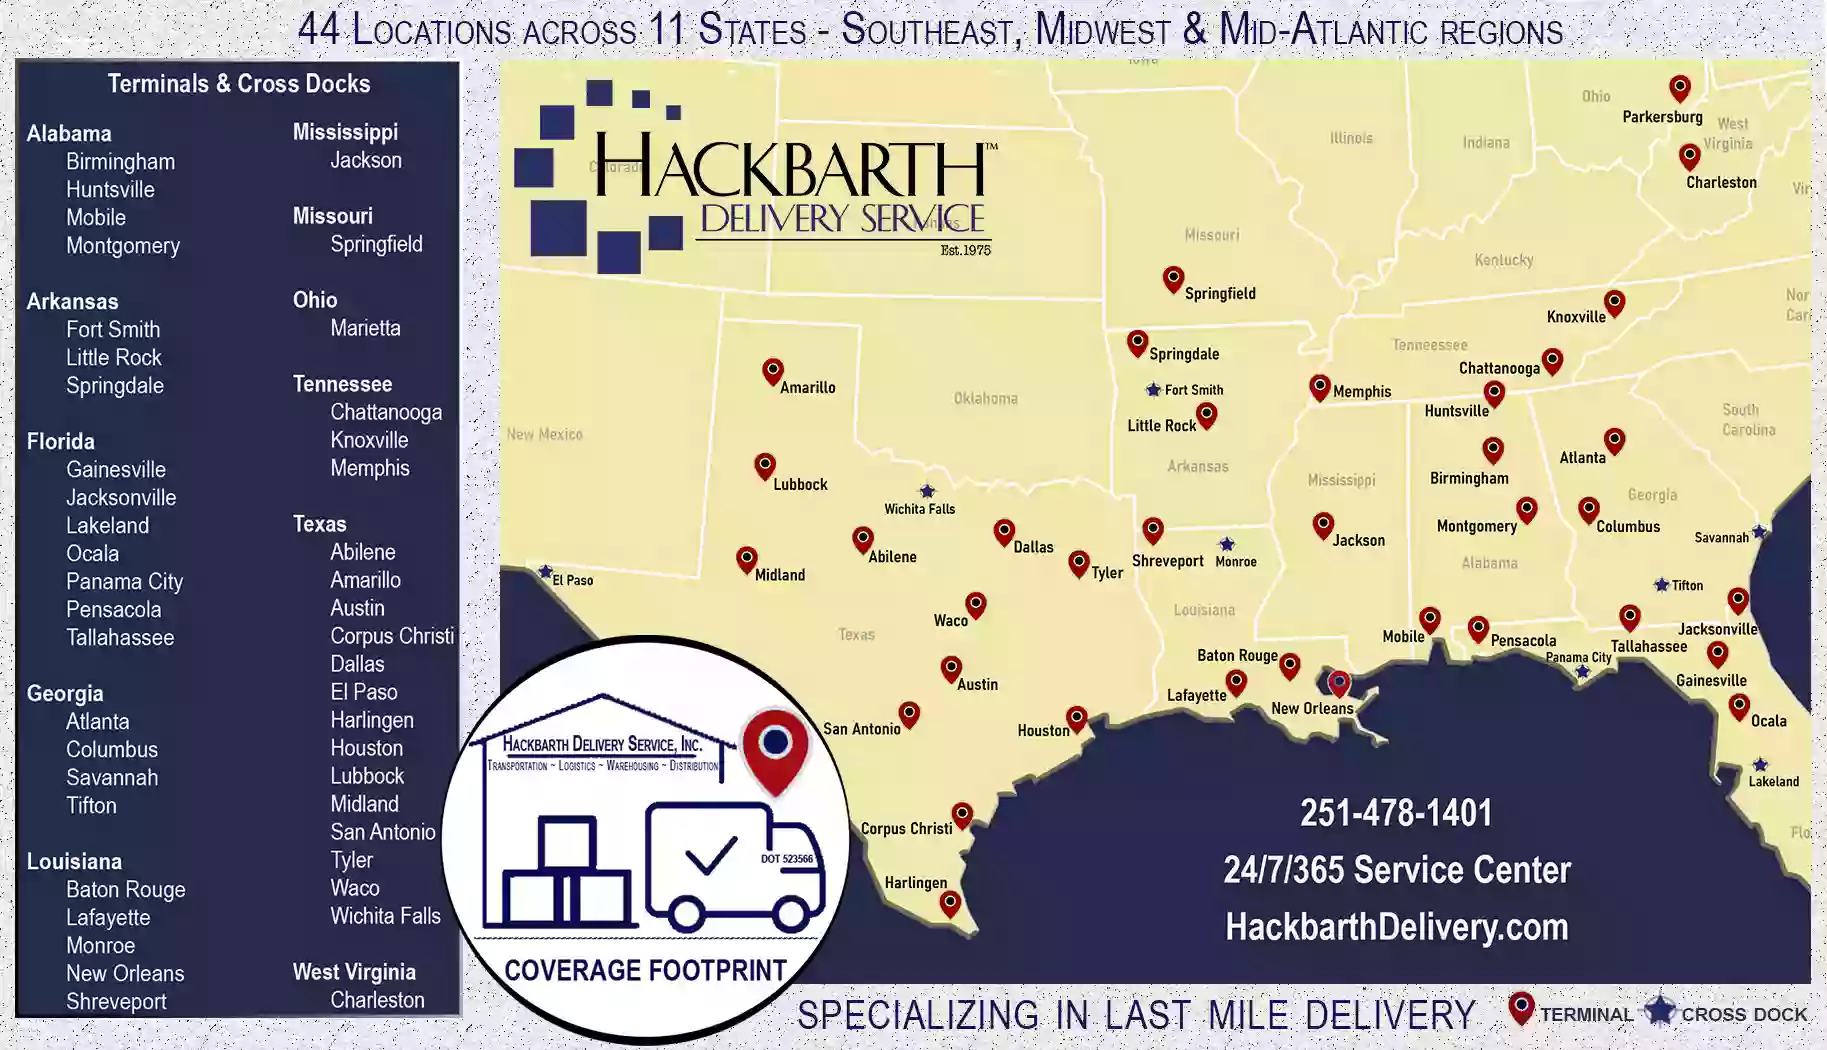 Hackbarth Delivery Service, Inc.